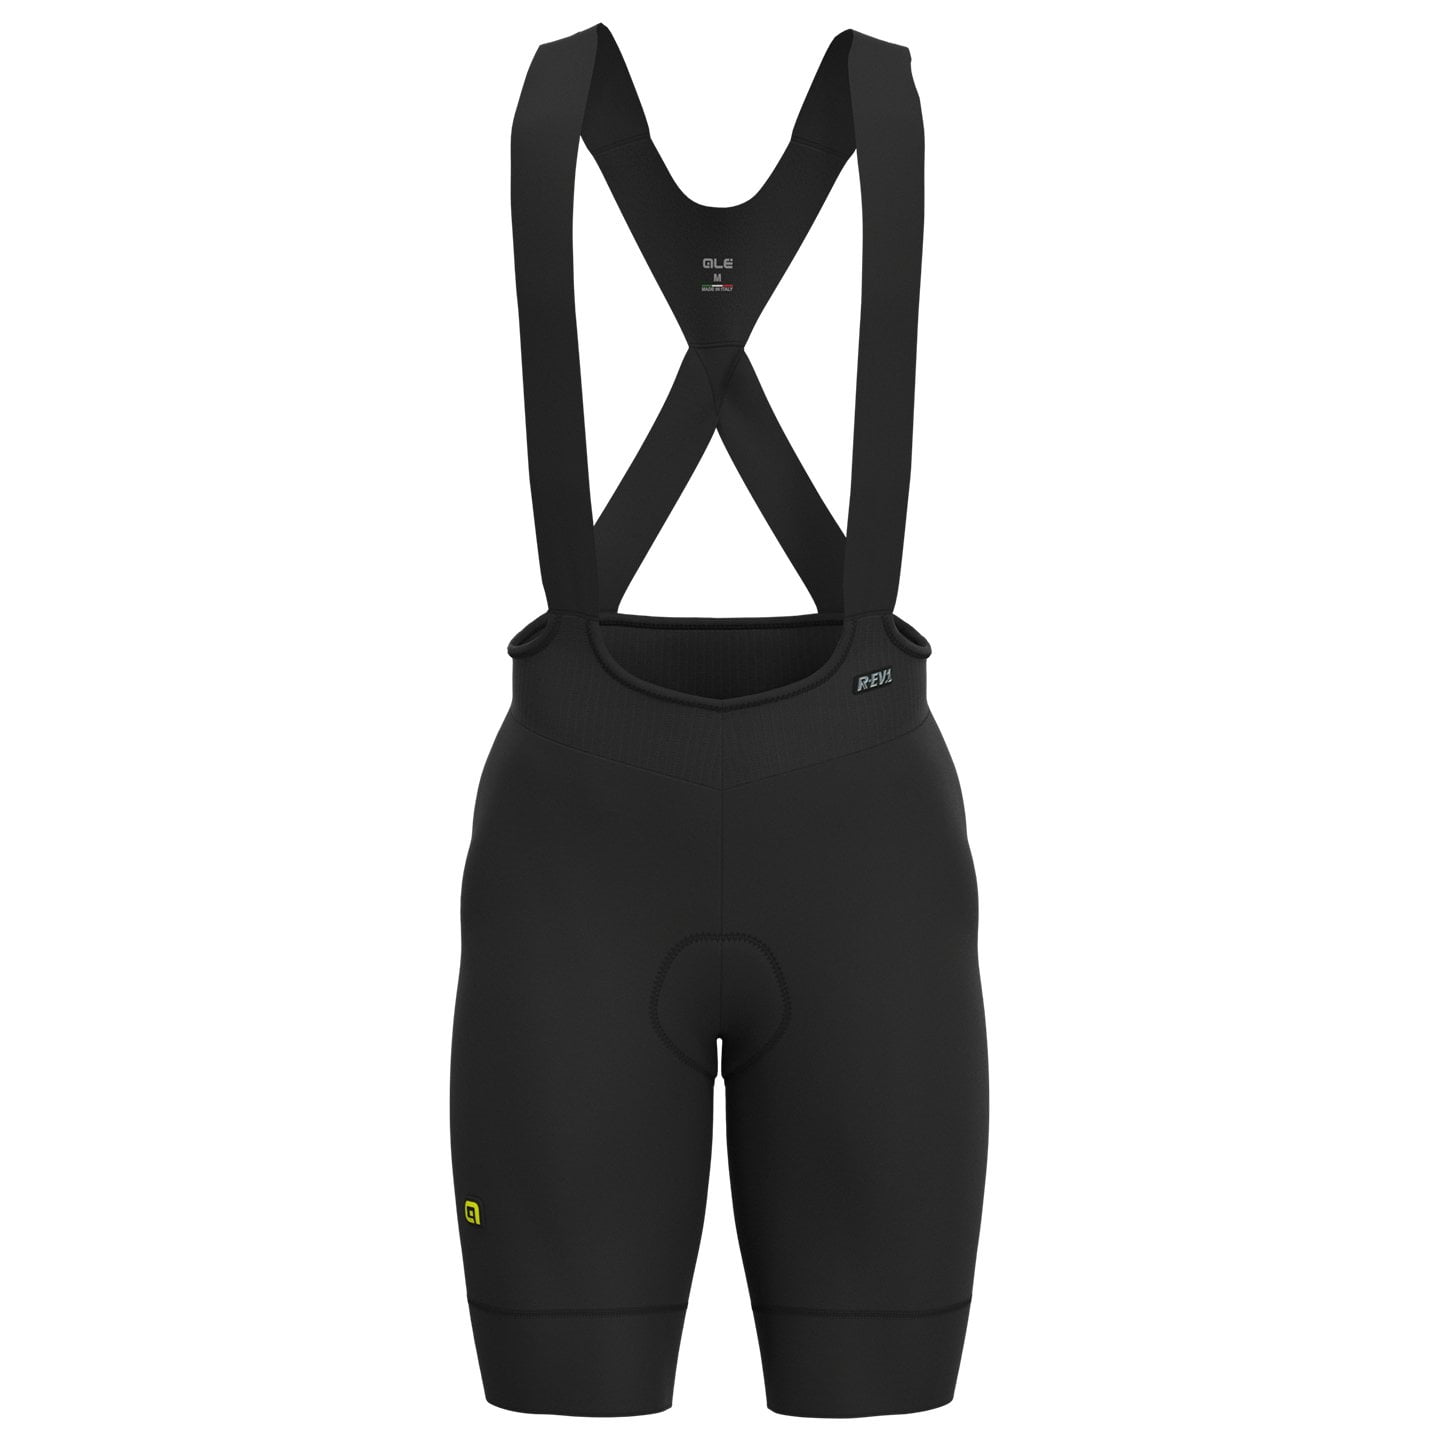 ALE Speedfondo Bib Shorts Bib Shorts, for men, size 2XL, Cycle shorts, Cycling clothing